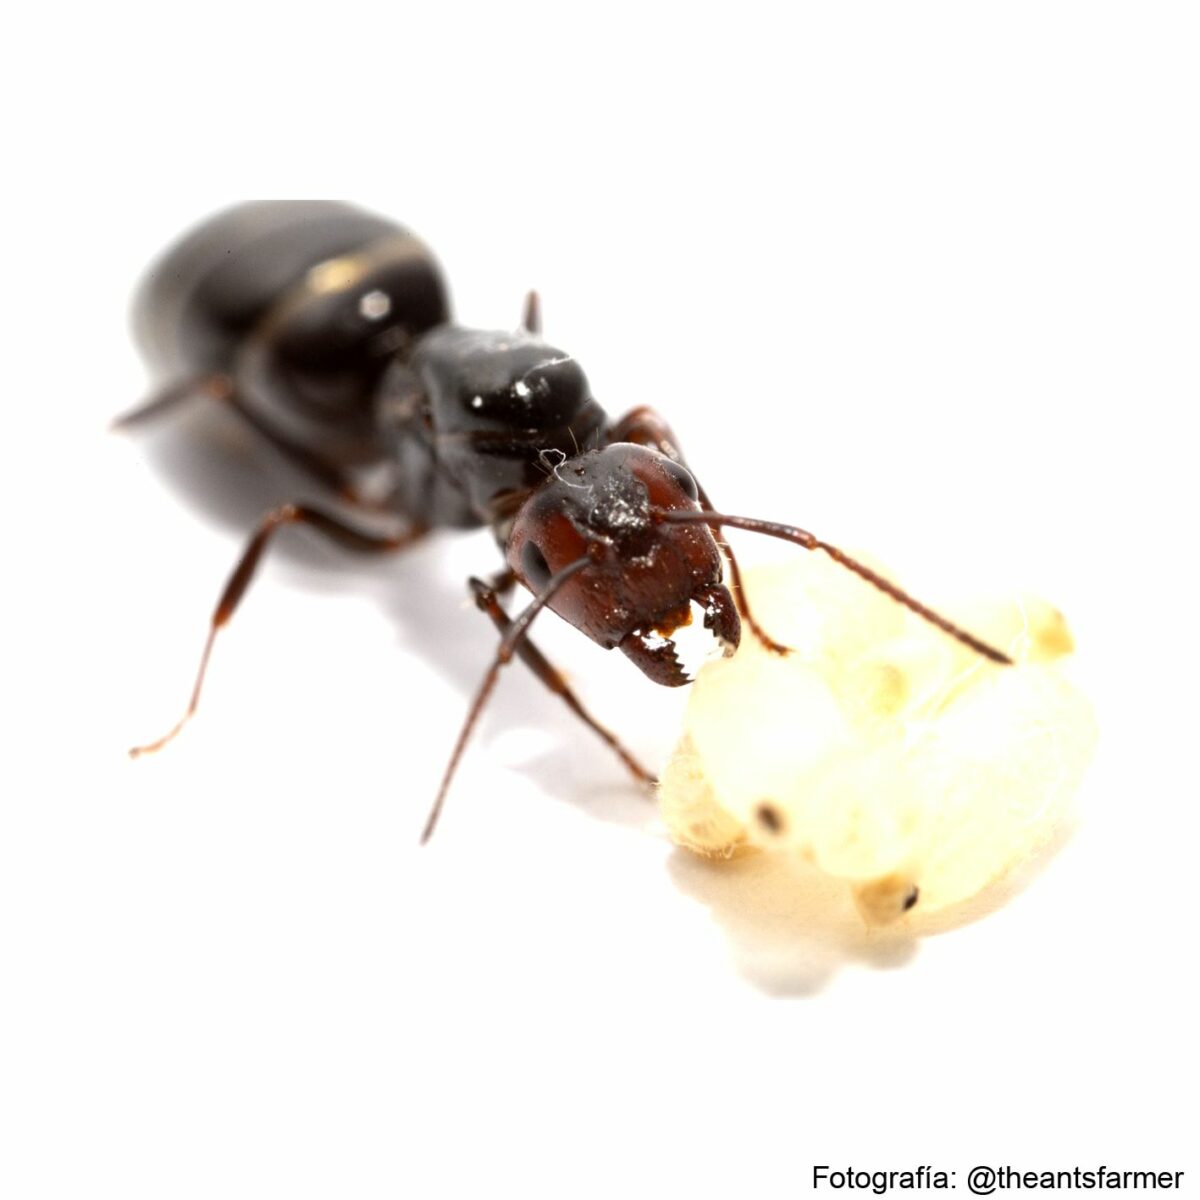 Camponotus lateralis (ants)